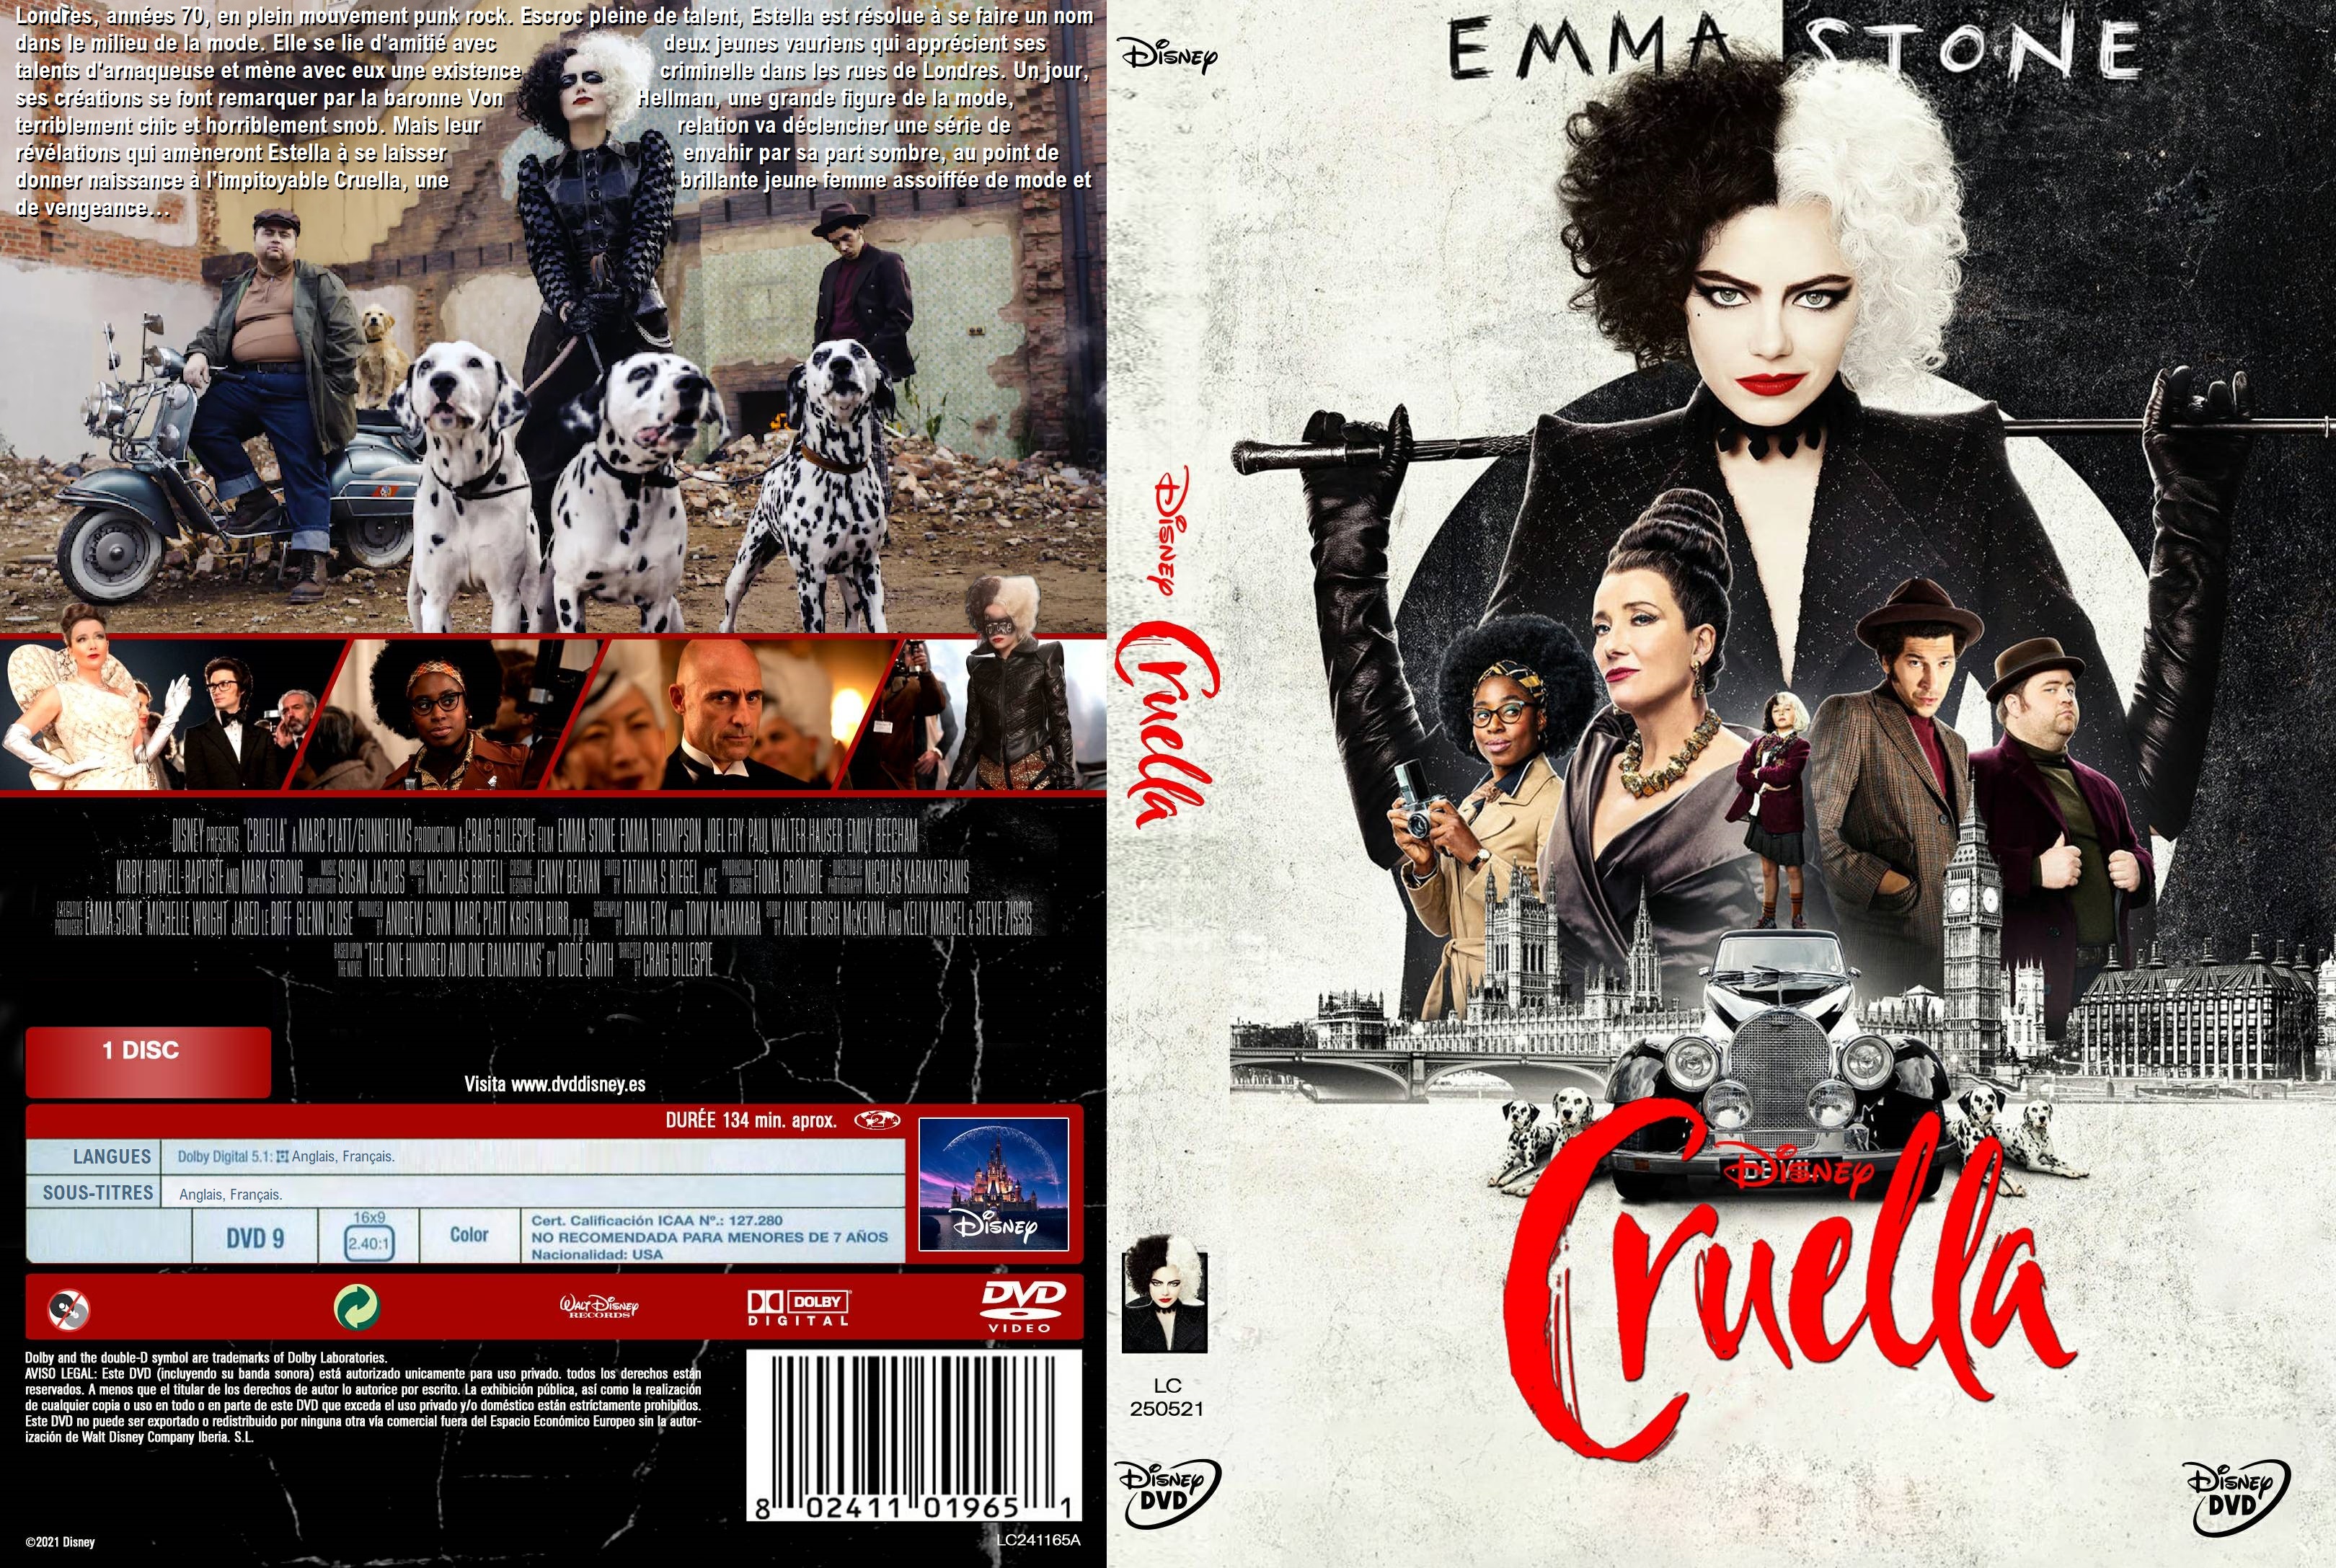 Jaquette DVD Cruella custom v2